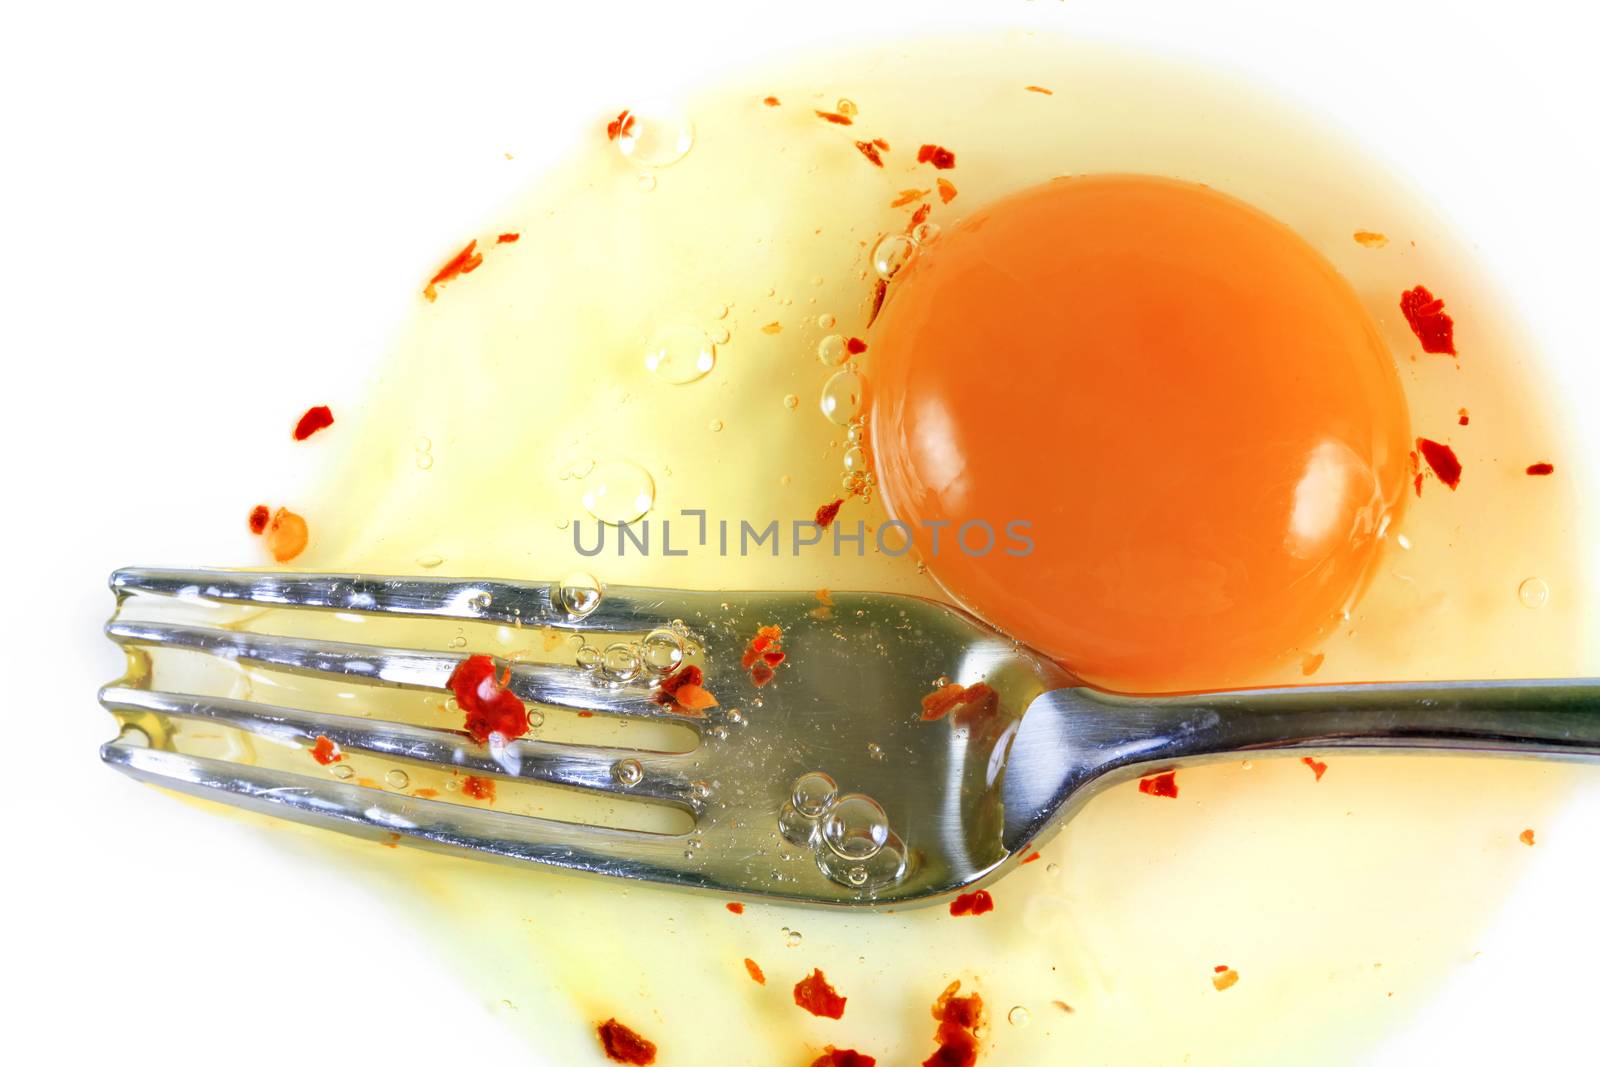 The image of a plug and broken egg